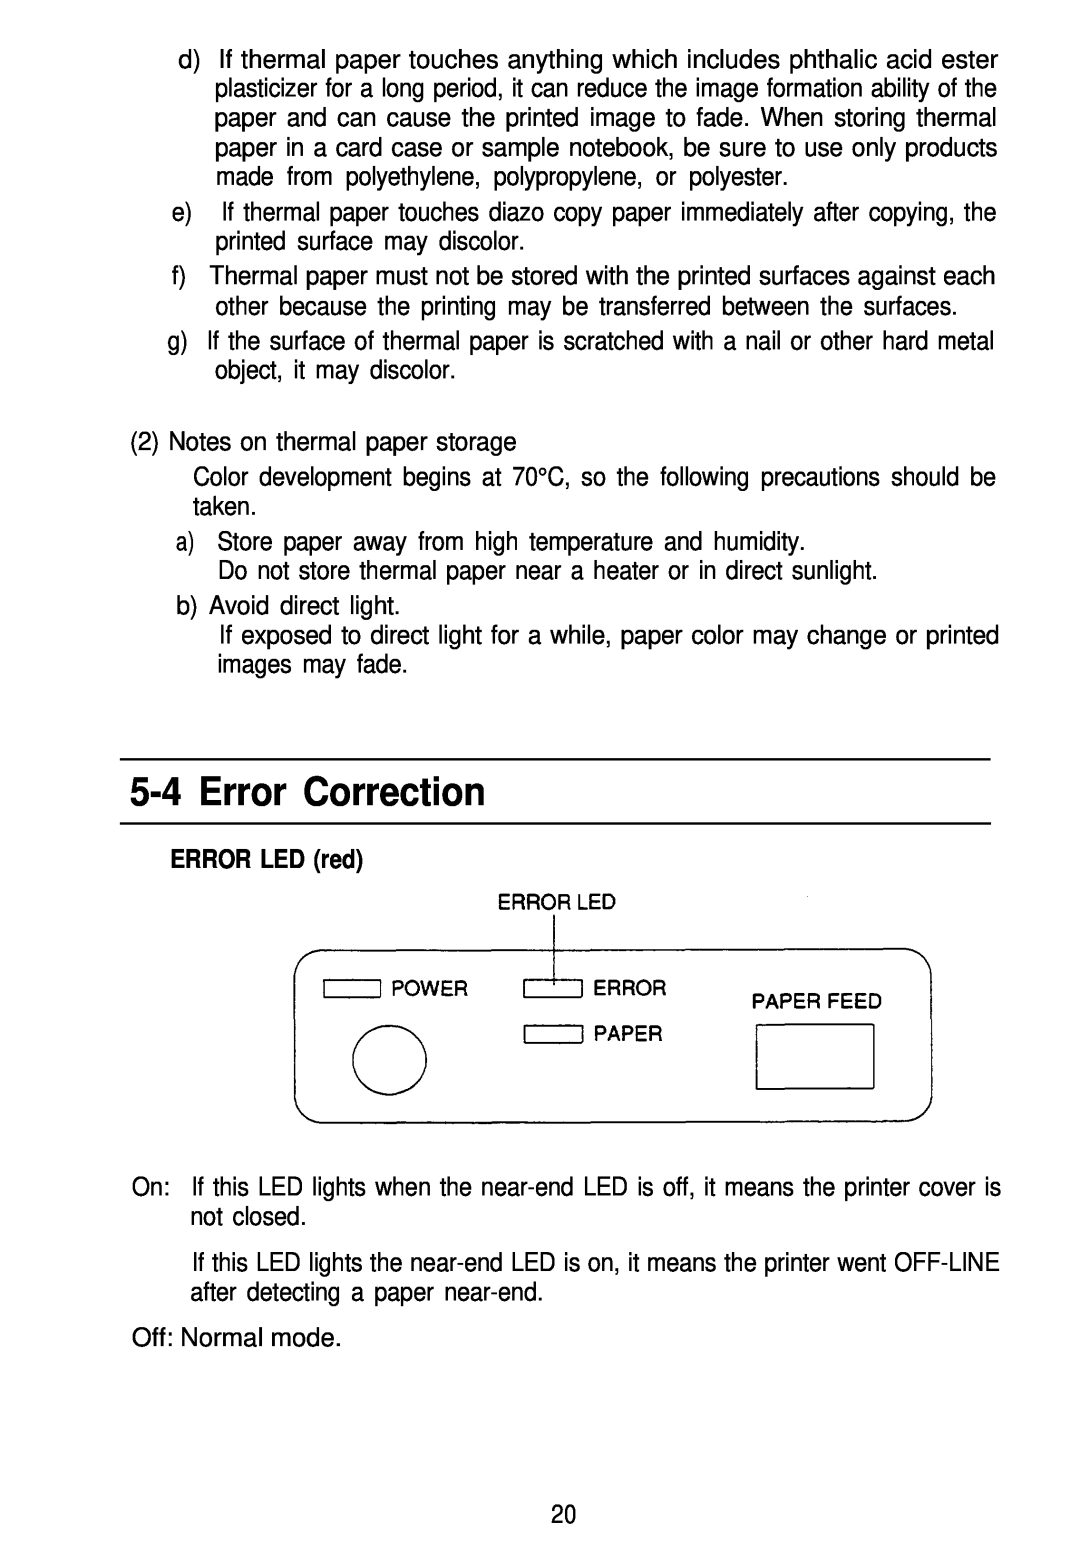 Seiko Group TM-L60 manual Error Correction, n ERROR LED red 